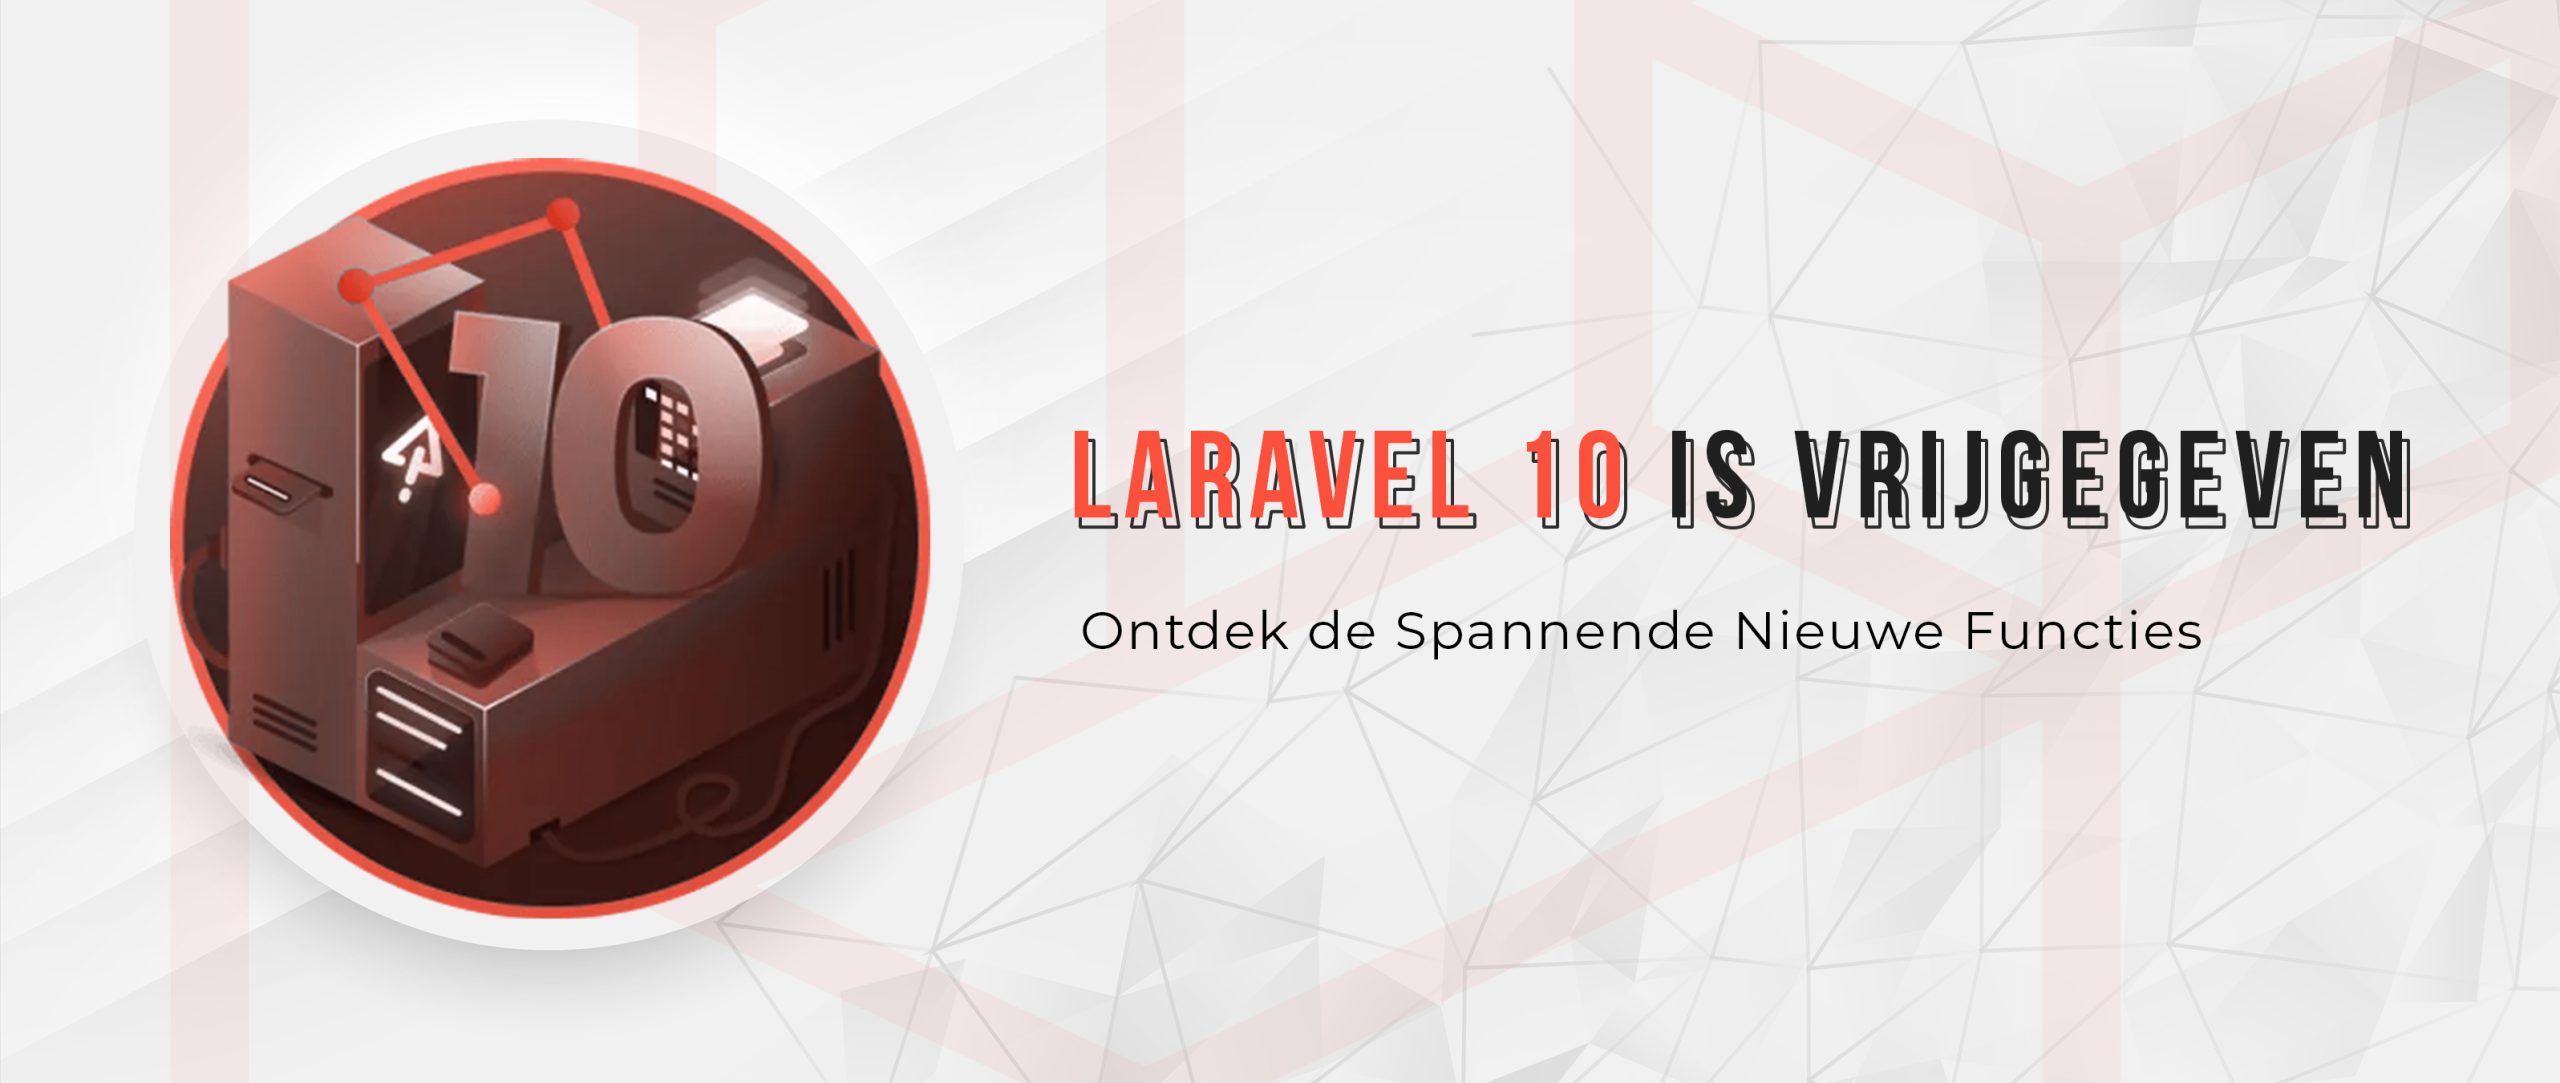 Laravel v10 vrijgegeven